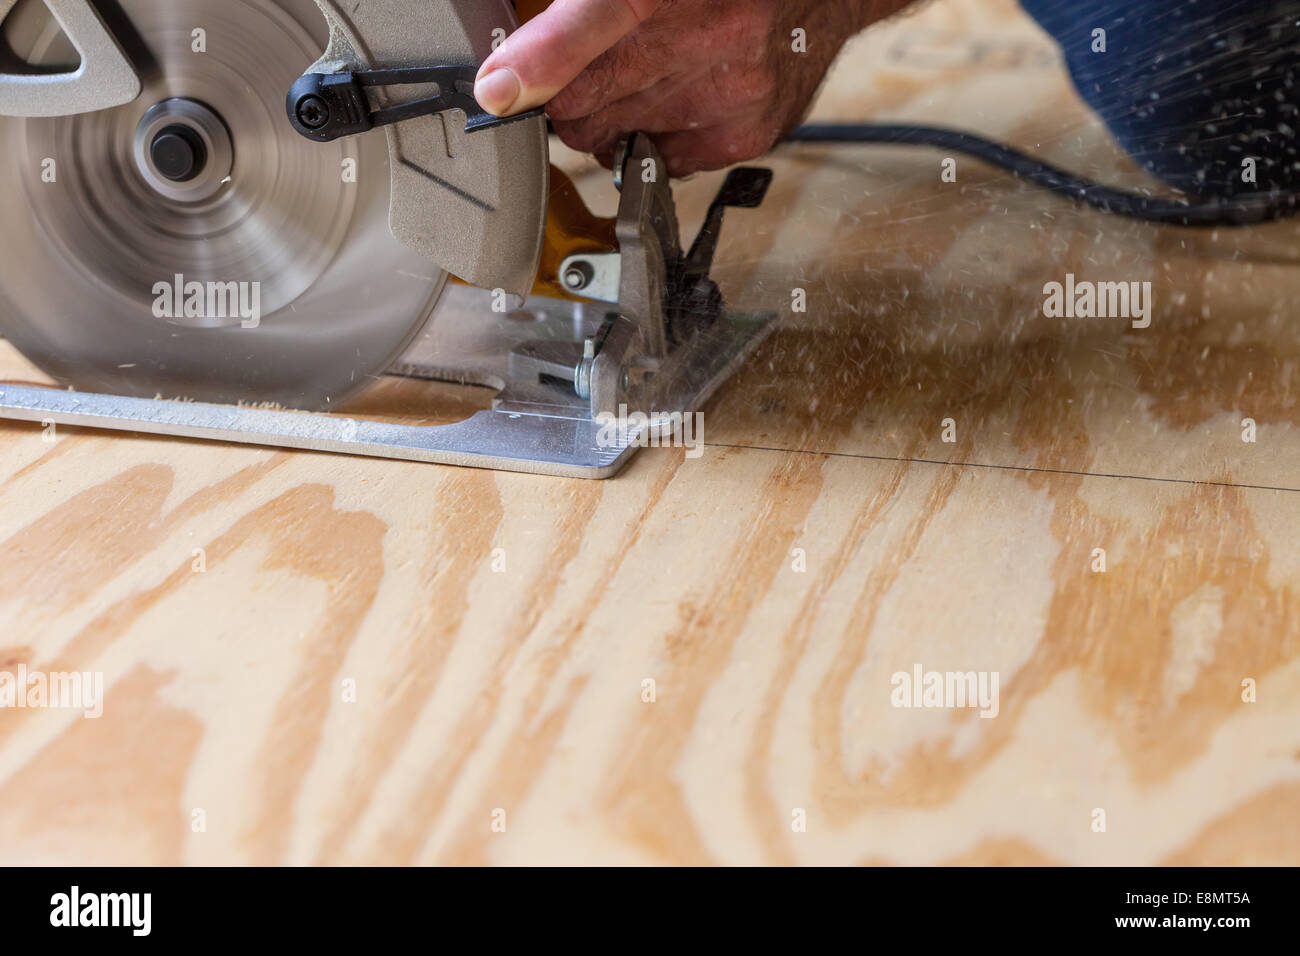 Man using a circular saw to cut plywood Stock Photo